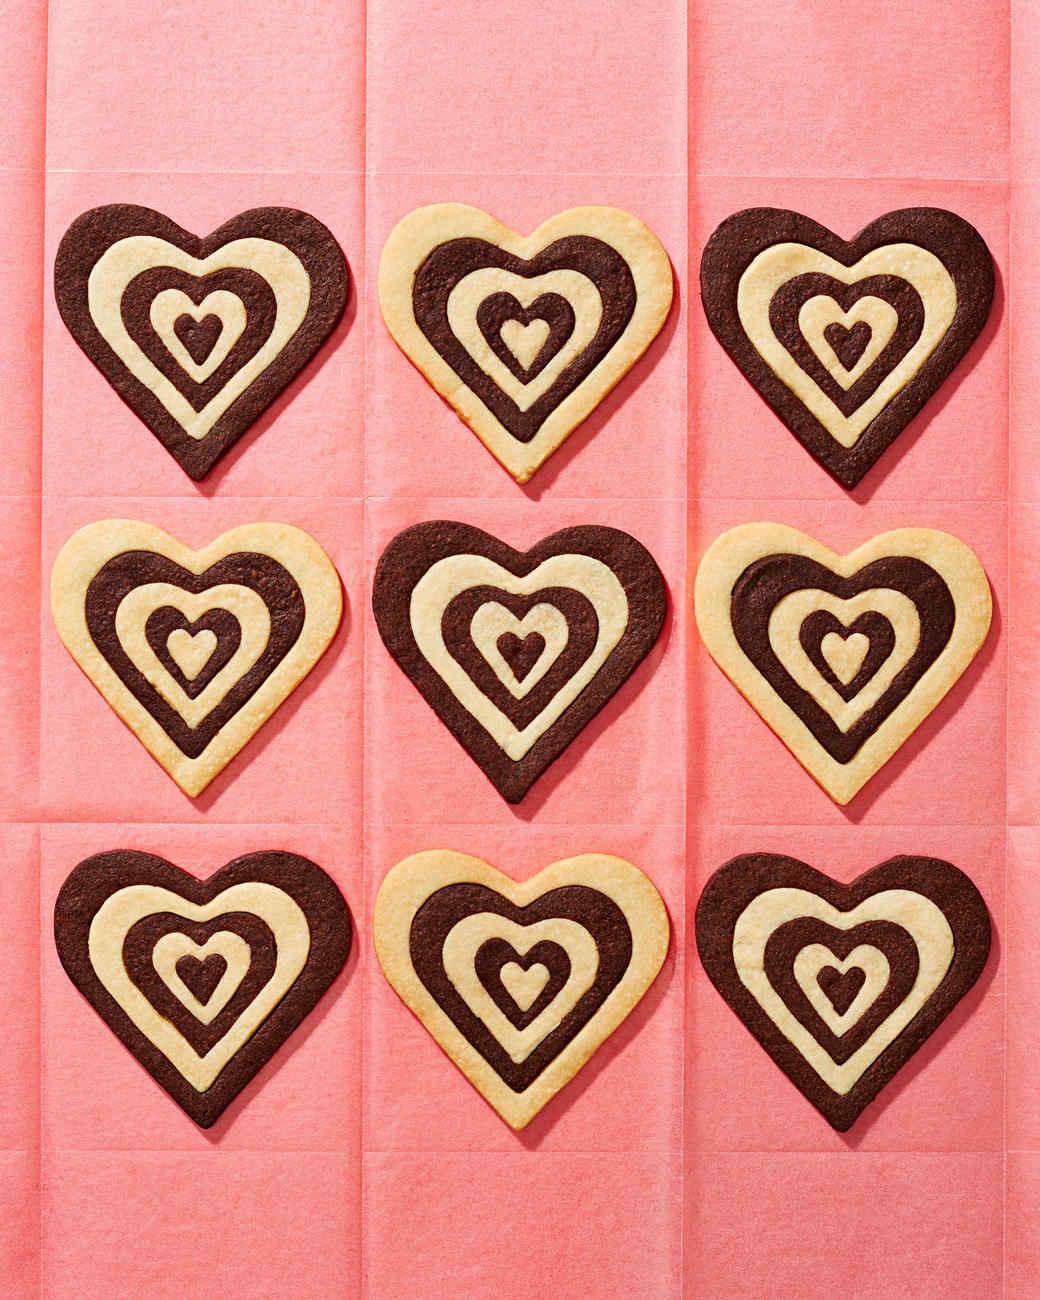 Sweetie-dark-and-white-chocolate-shortbread-hearts-102835194_vert